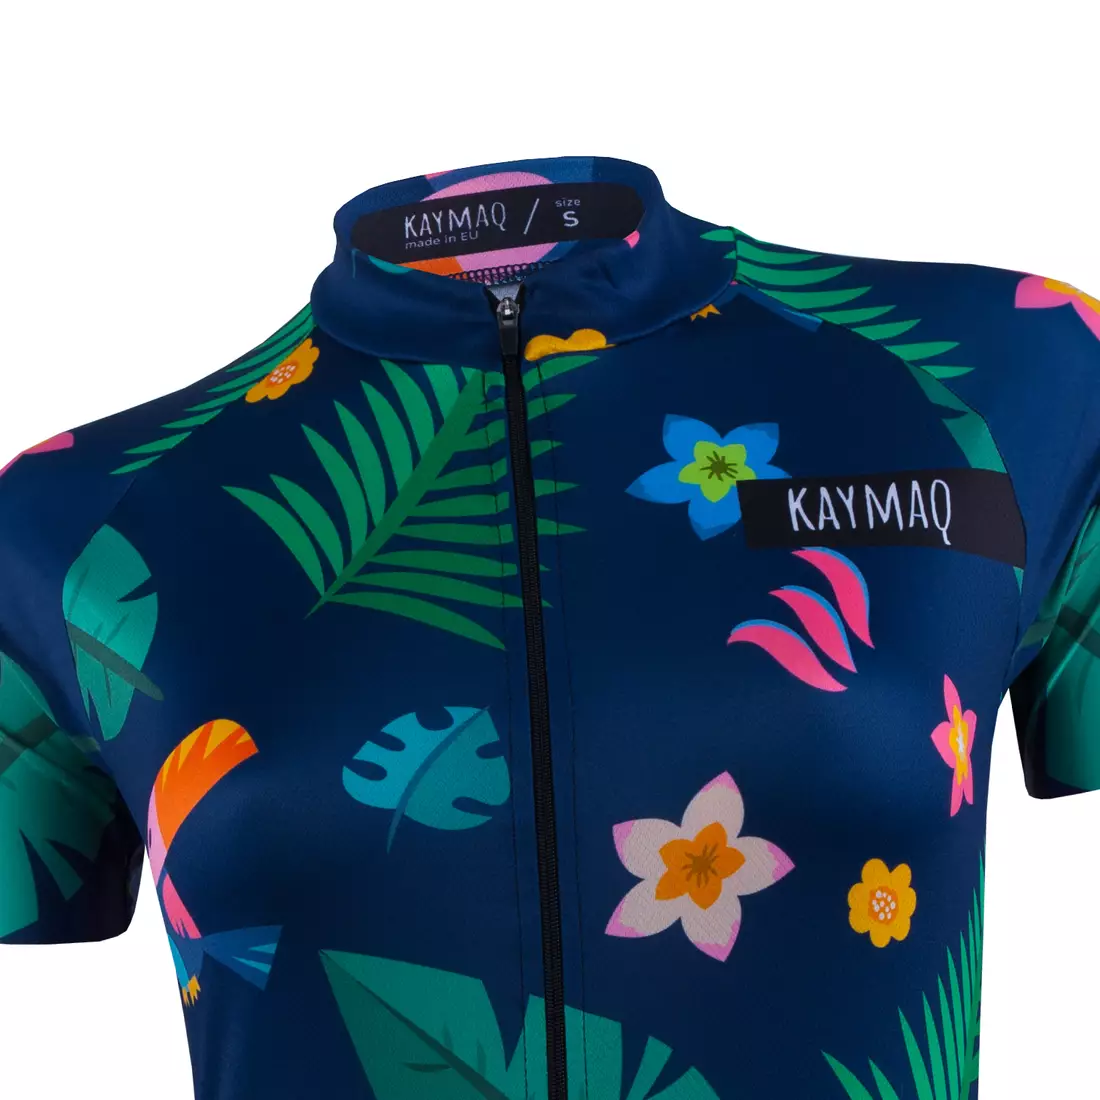 KAYMAQ PARROT women's cycling jersey